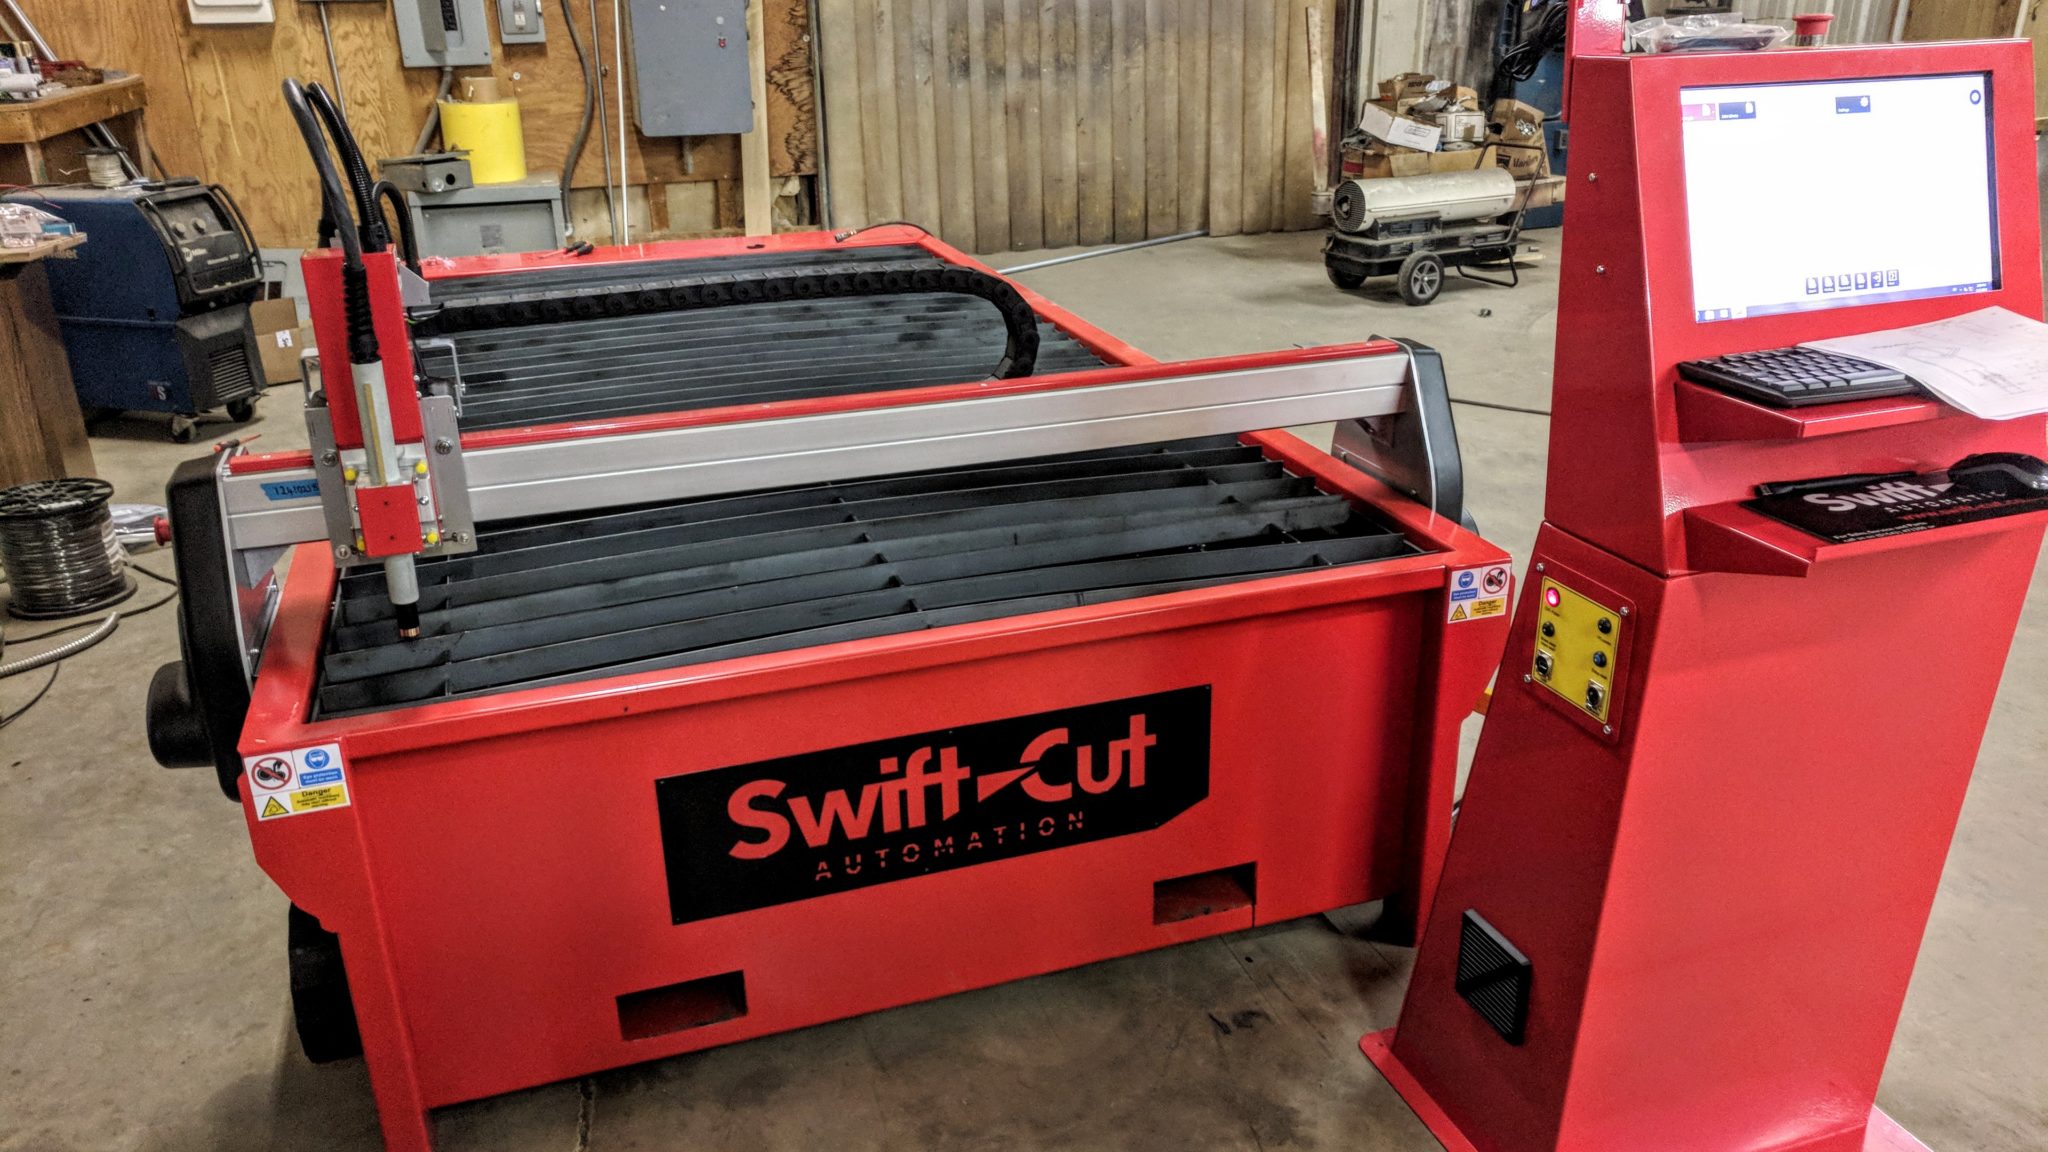 BOLDesign with the Swift-Cut Pro machine